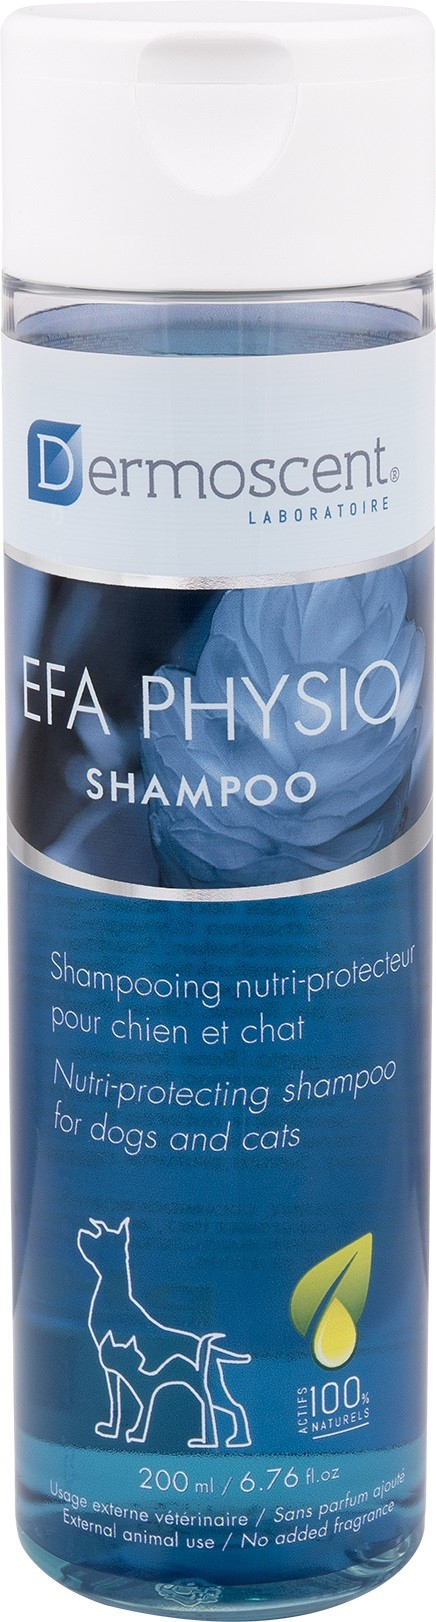 Dermoscent EFA Physio voedende shampoo